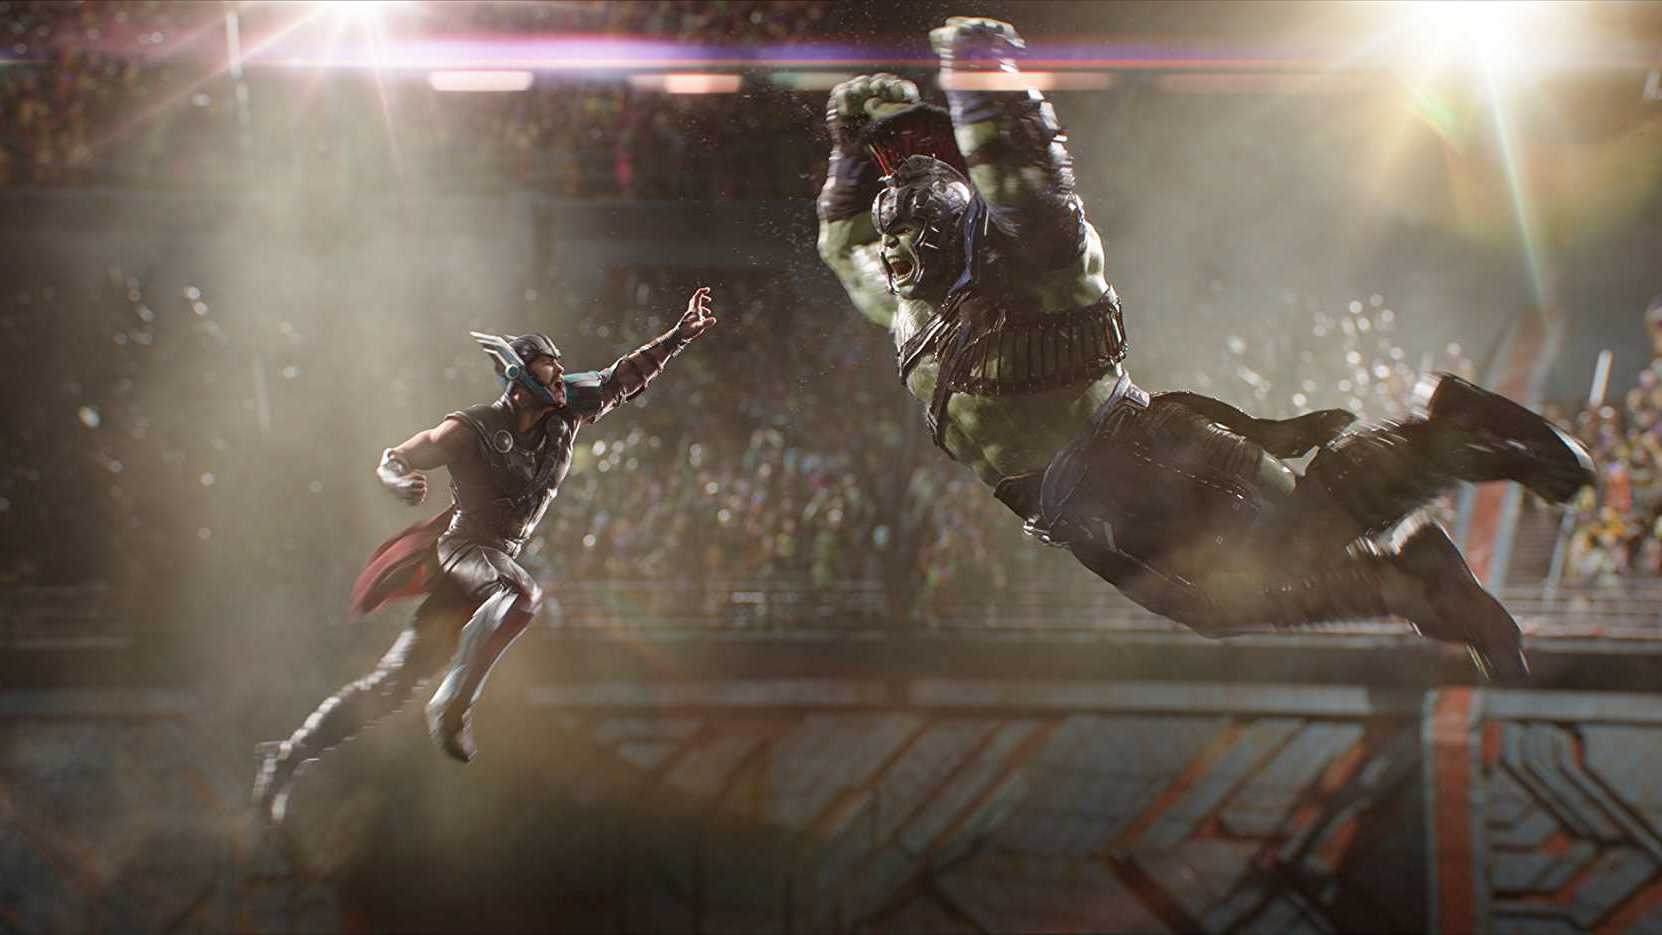 Thor: Ragnarok Movie Poster